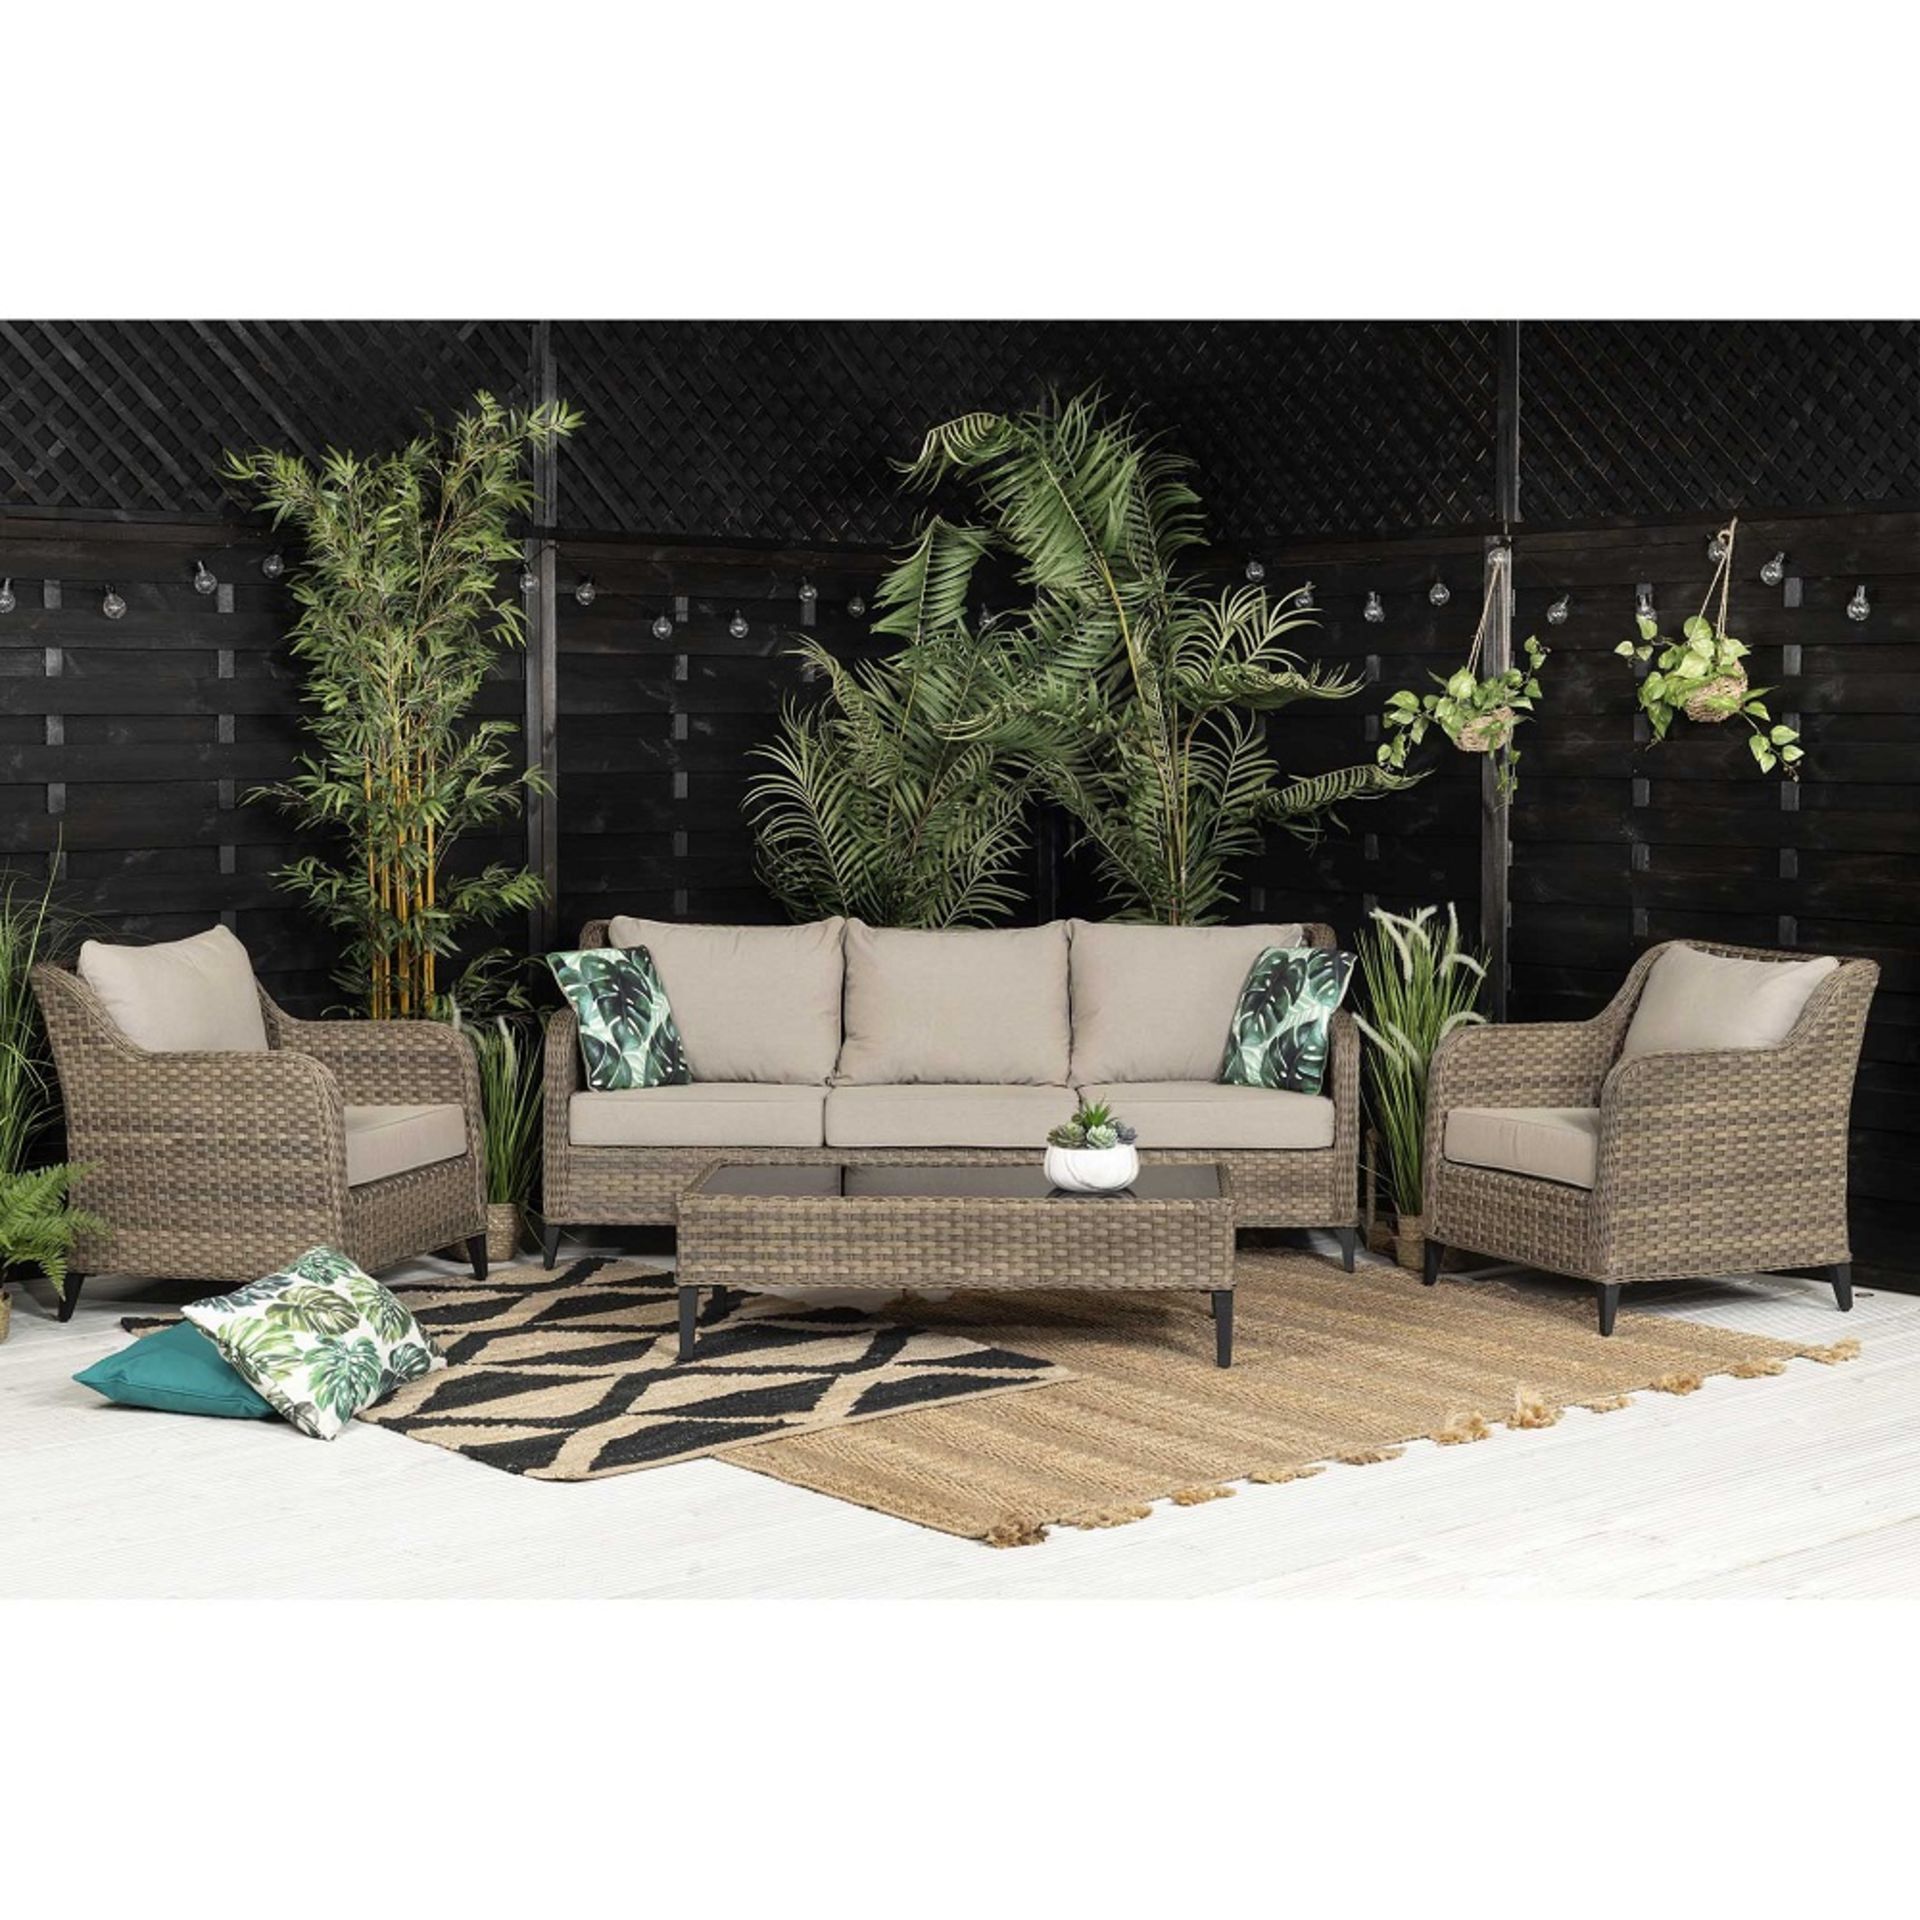 BRAND NEW- RRP £3396 - 'Home Junction Isla' PREMIUM Rattan Garden Furniture Sofa Set + Coffee Table